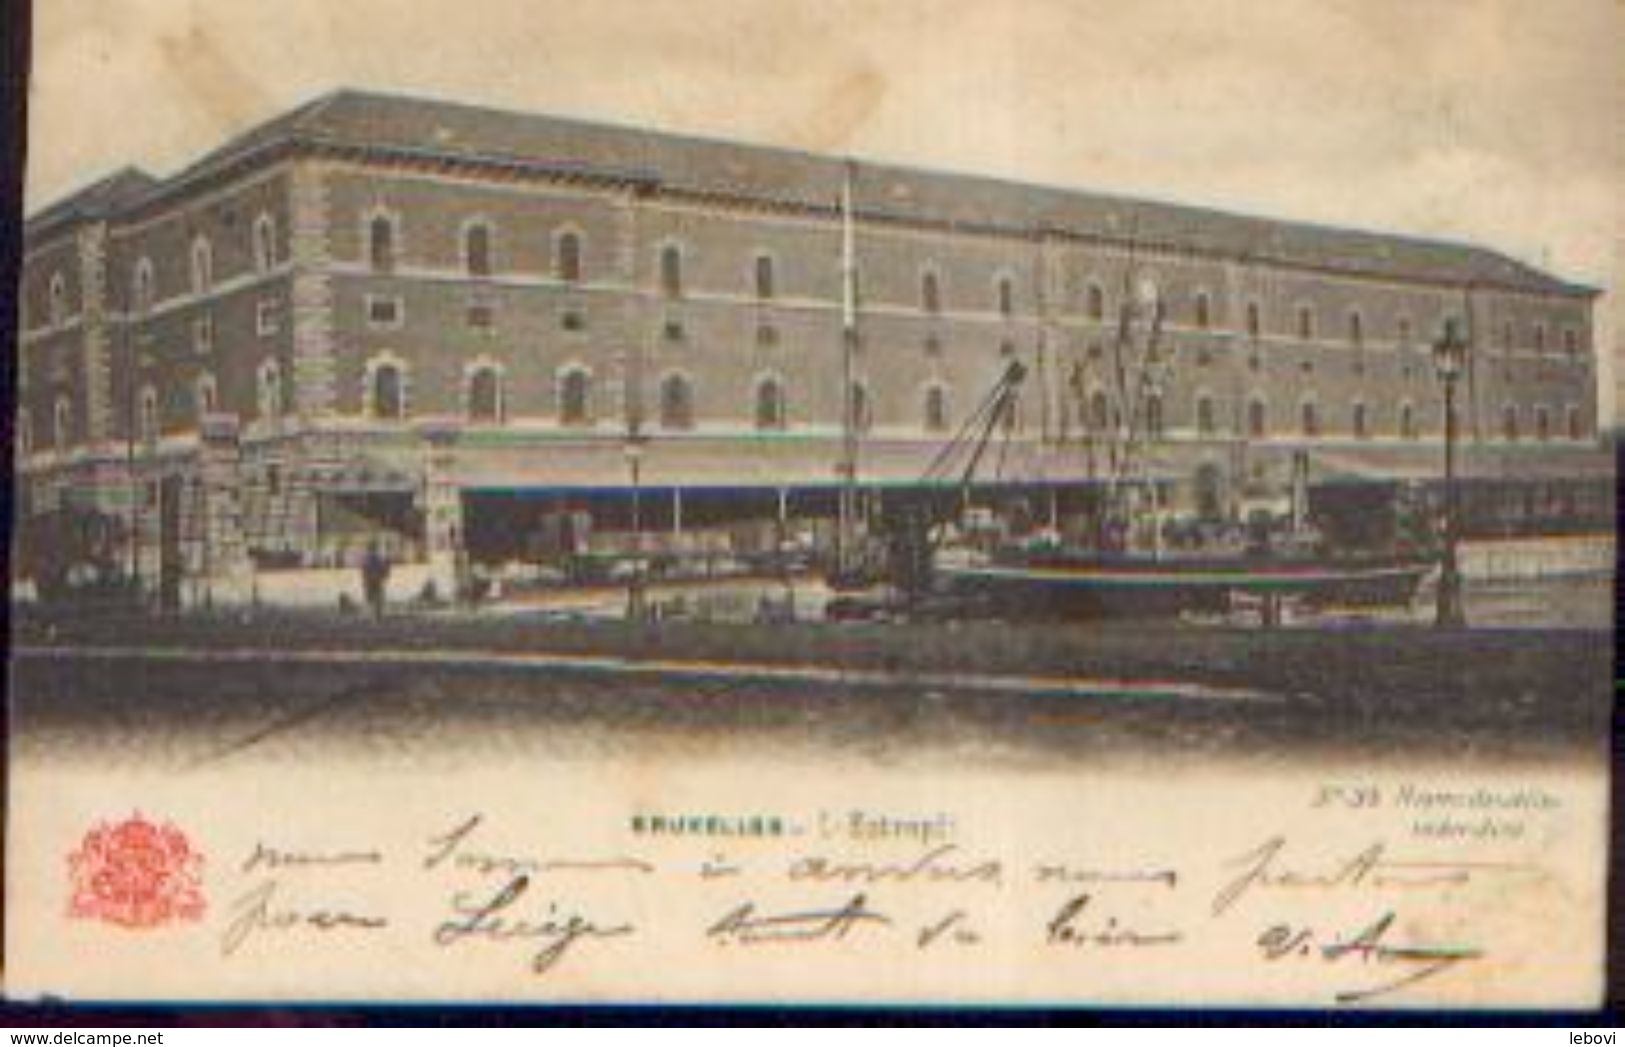 BRUXELLES « L’entrepôt»- Ed. Grand Bazar Anspach, Bxl (1904). - Maritime